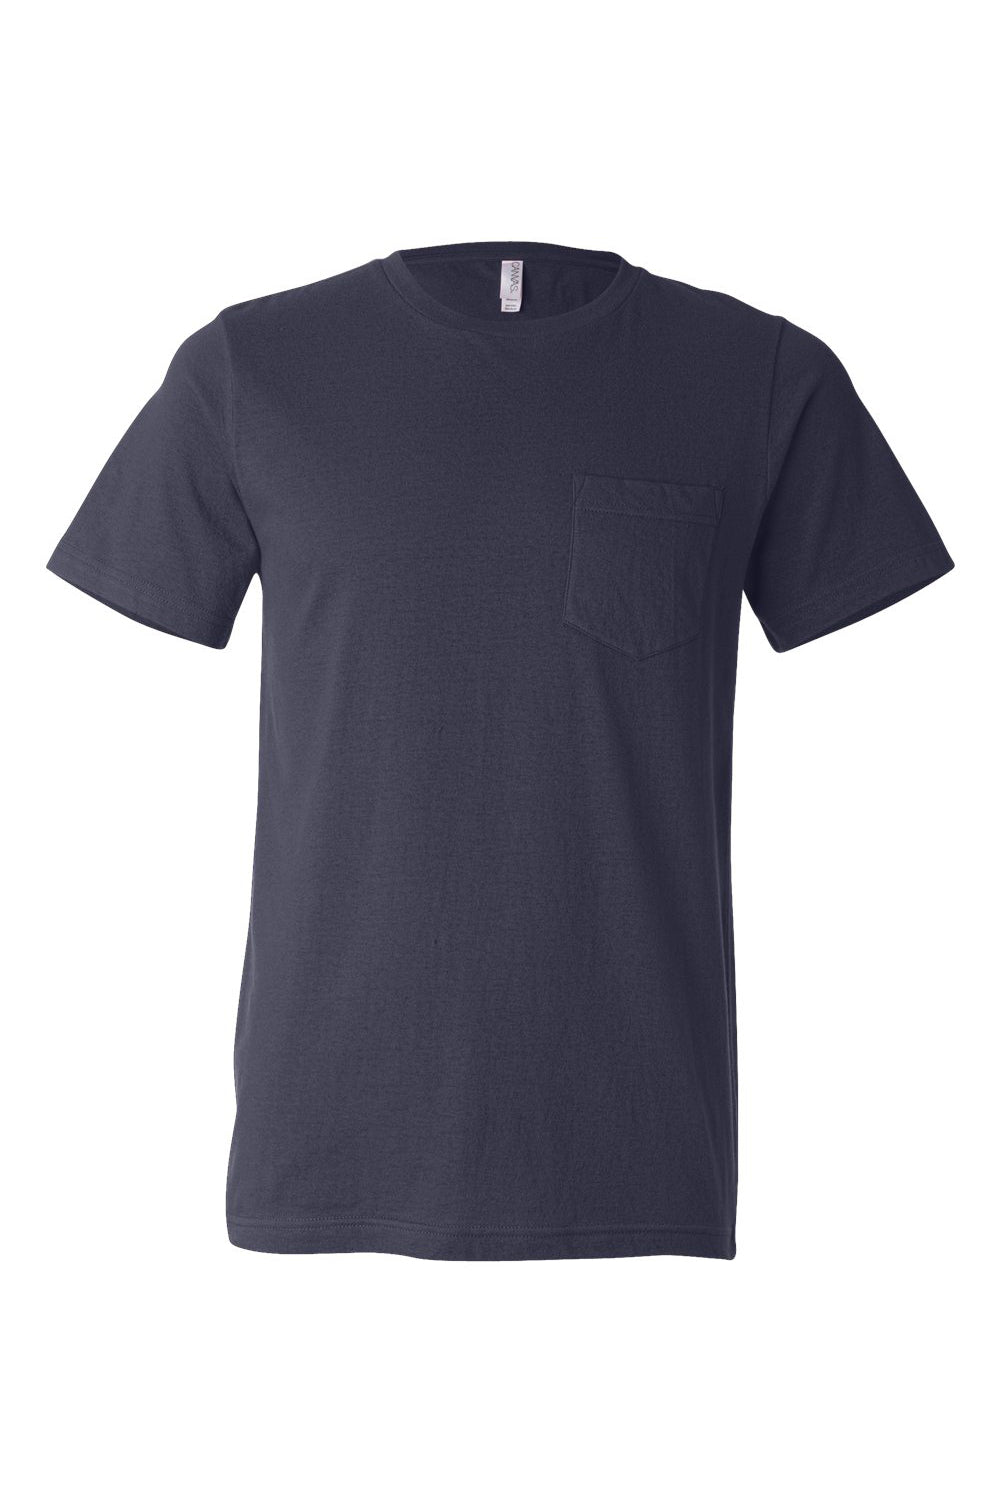 Bella + Canvas 3021 Mens Jersey Short Sleeve Crewneck T-Shirt w/ Pocket Navy Blue Flat Front